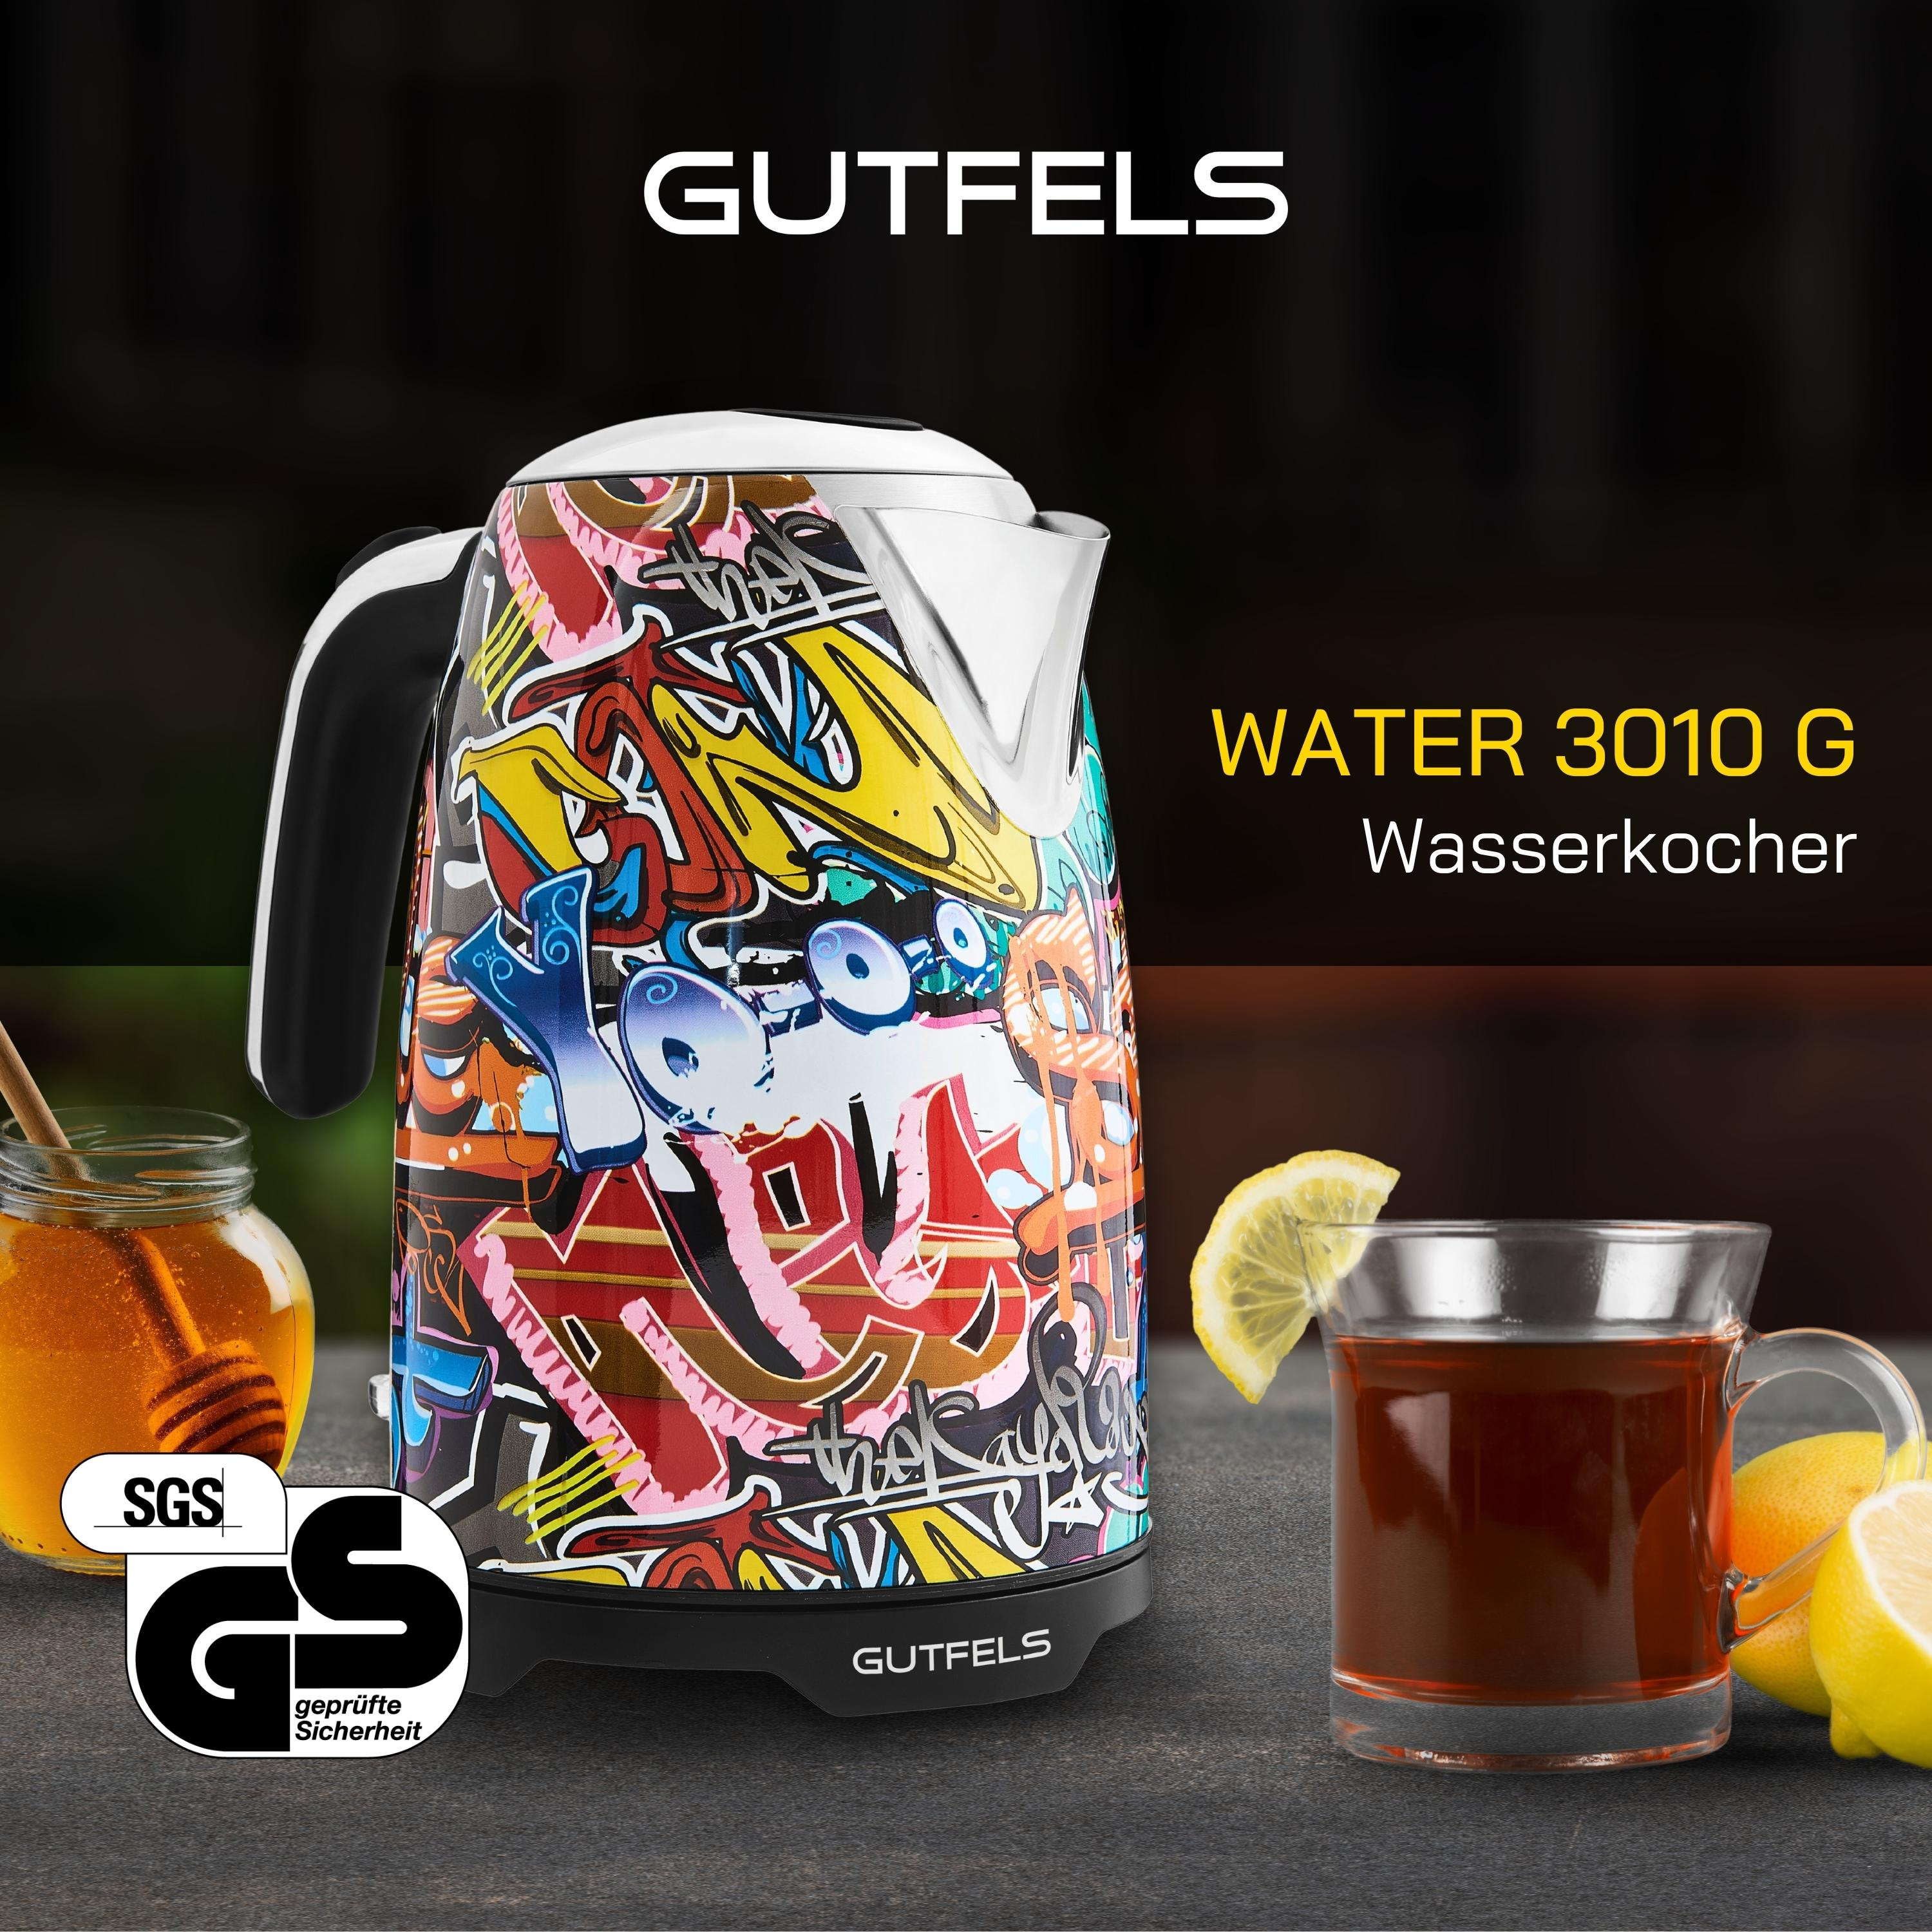 GUTFELS WATER 3010 Wasserkocher, Bunt G